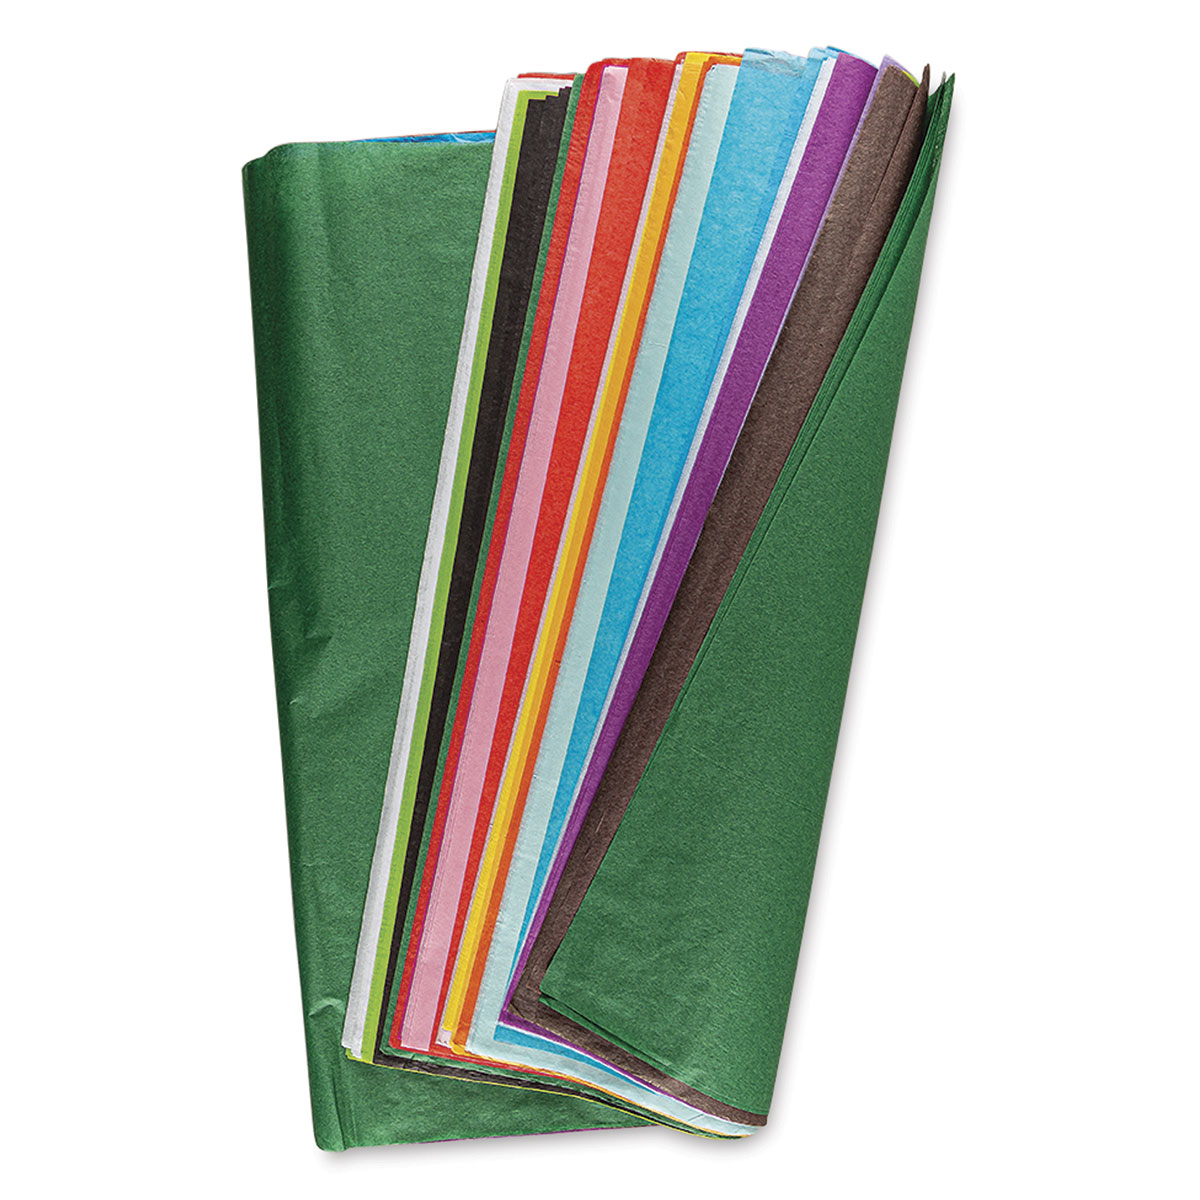 Colour Tissue Paper